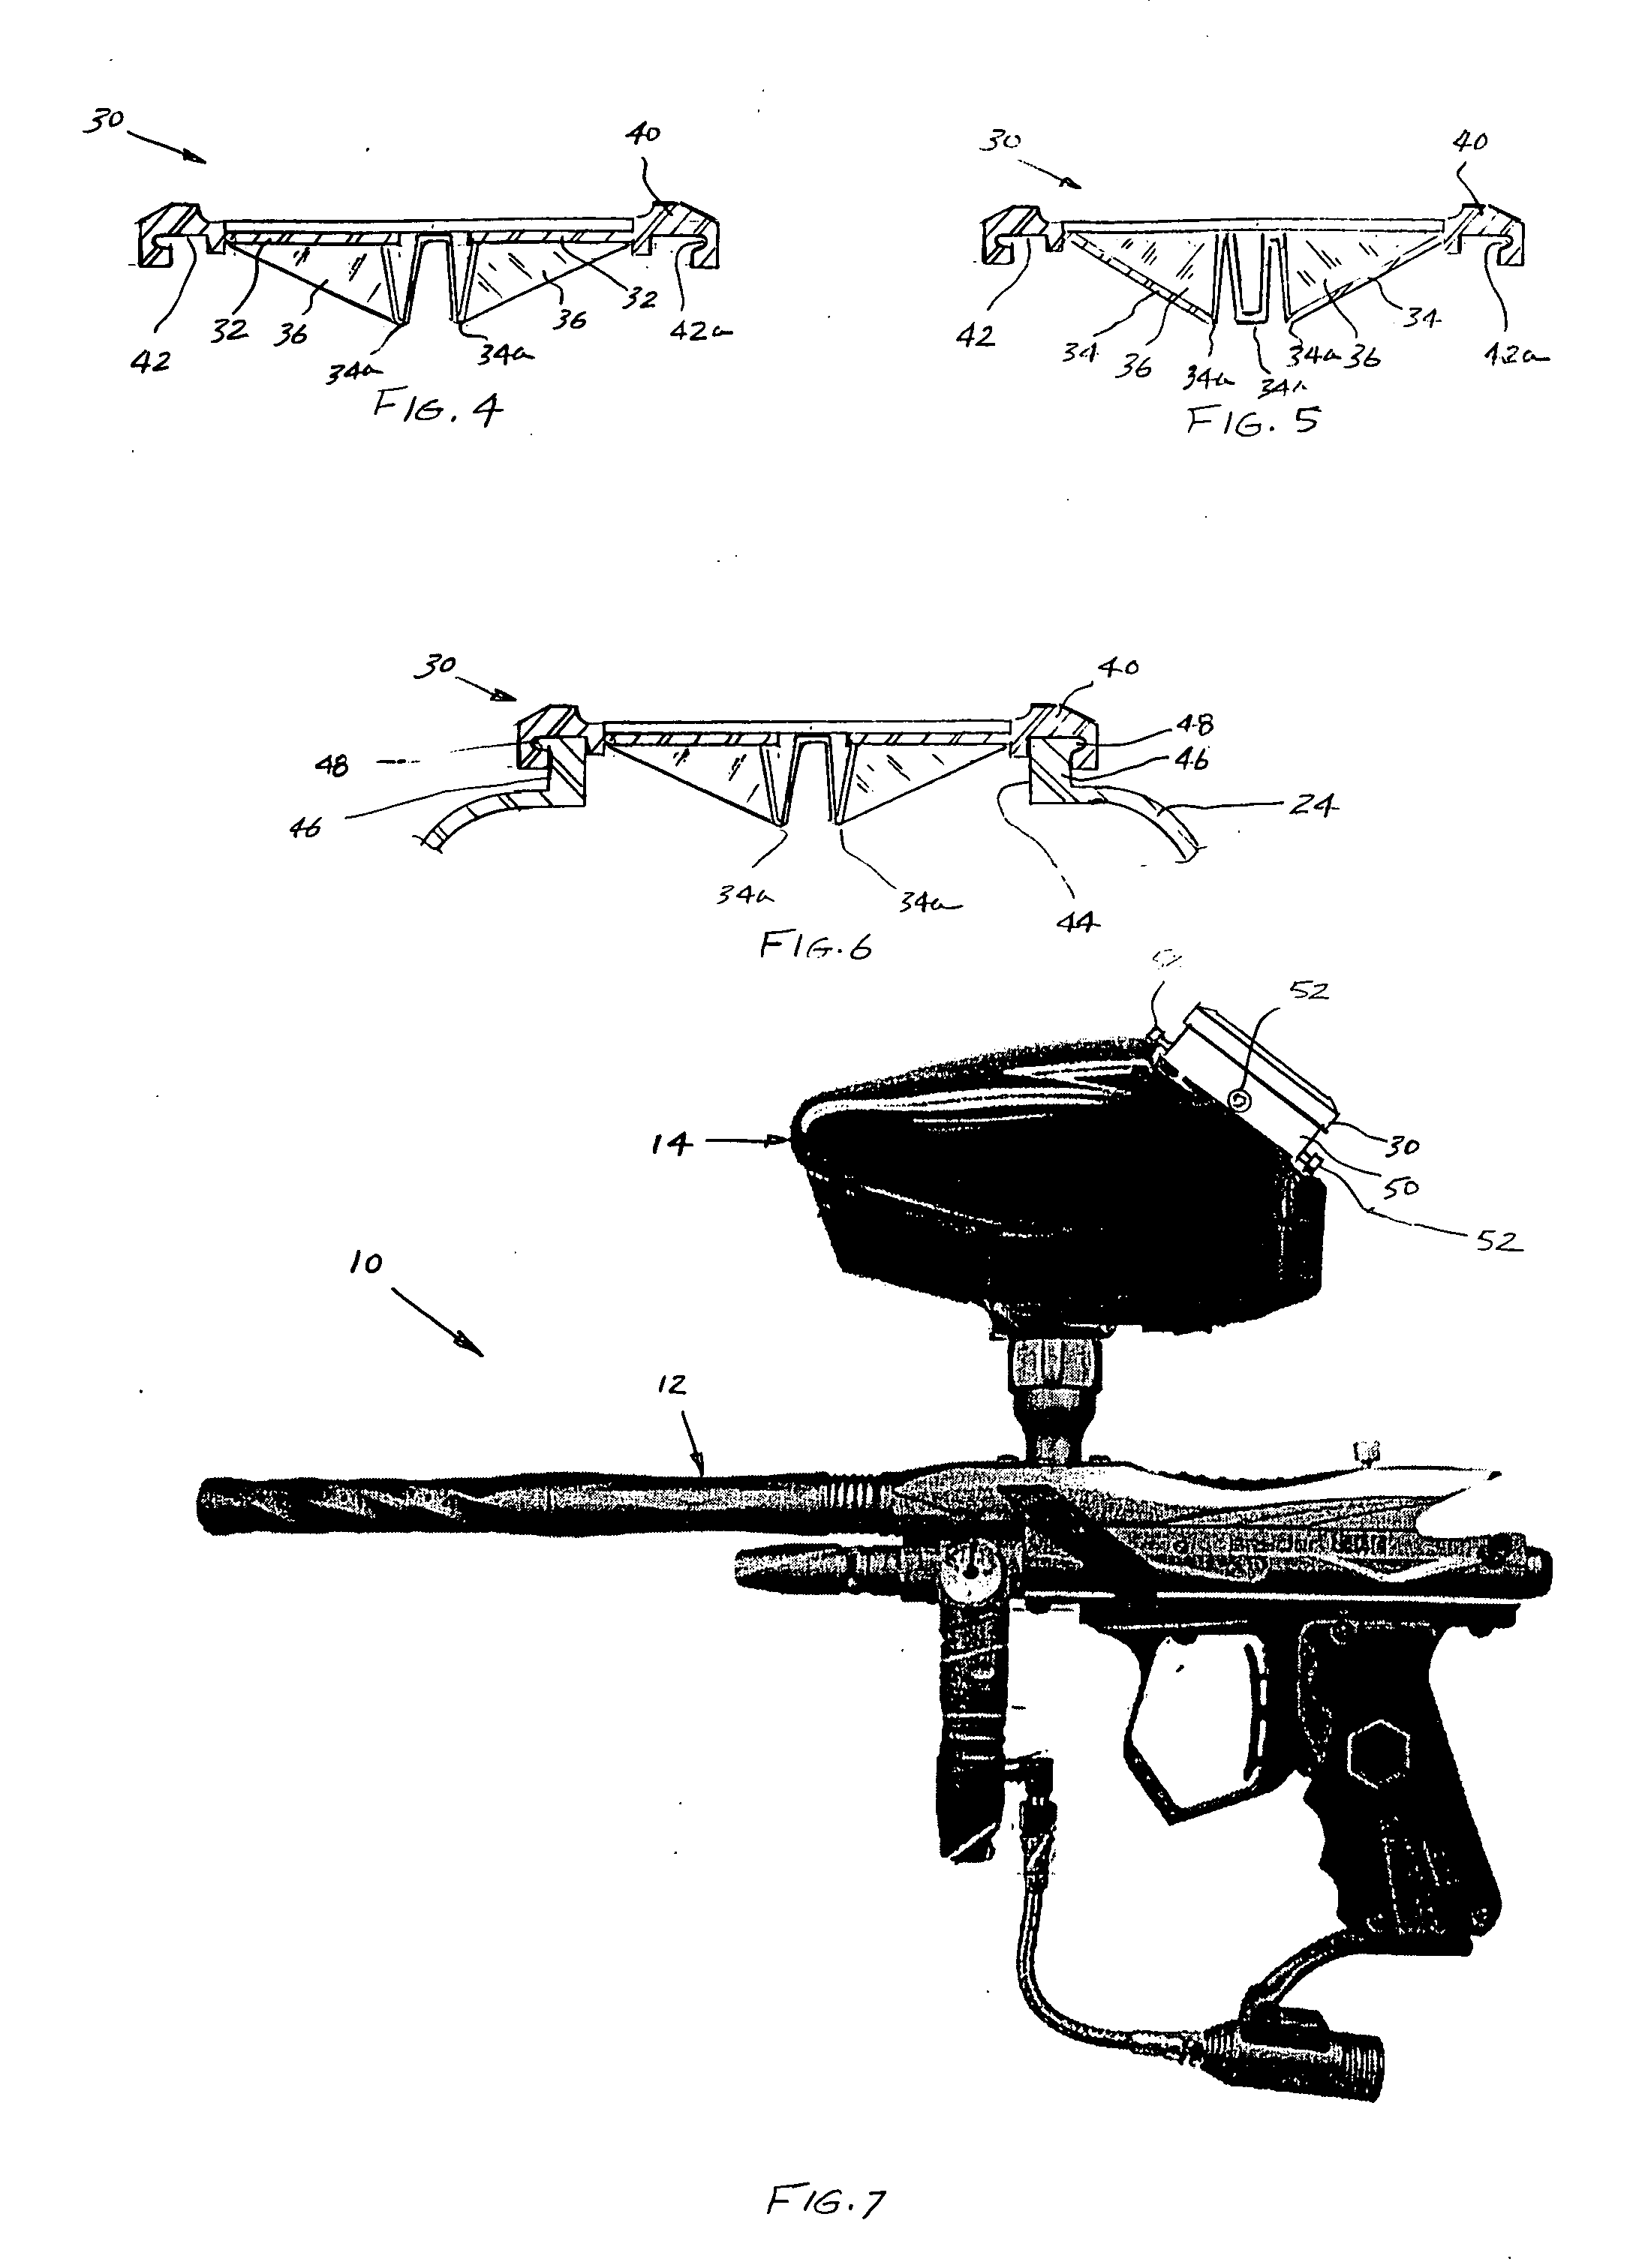 Paintball gun device